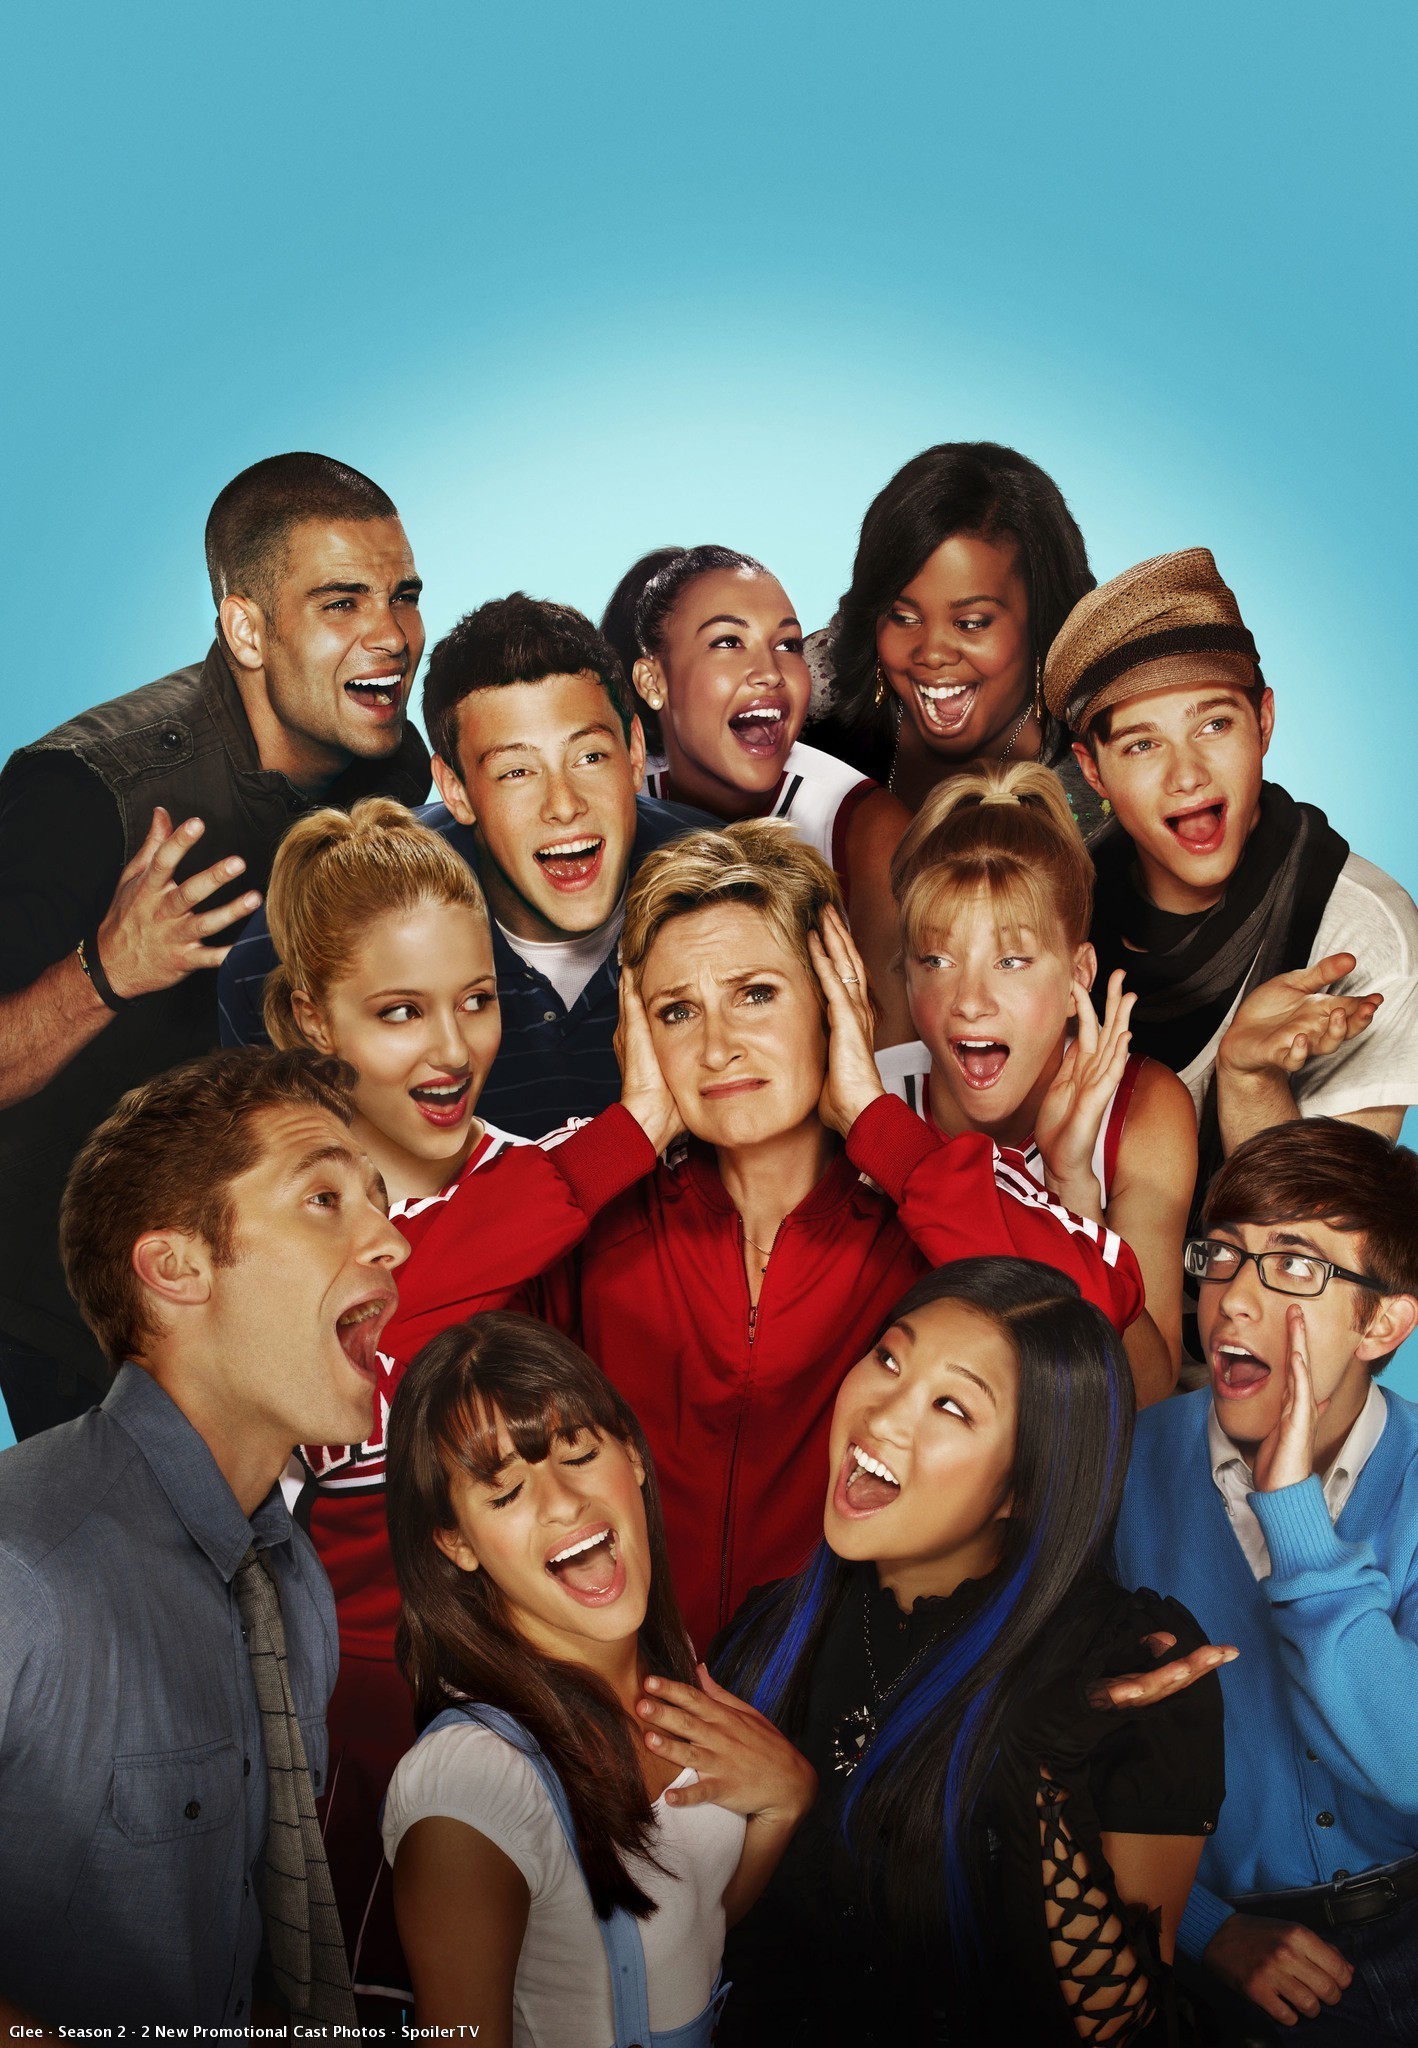 Glee Wallpaper For Phone Image